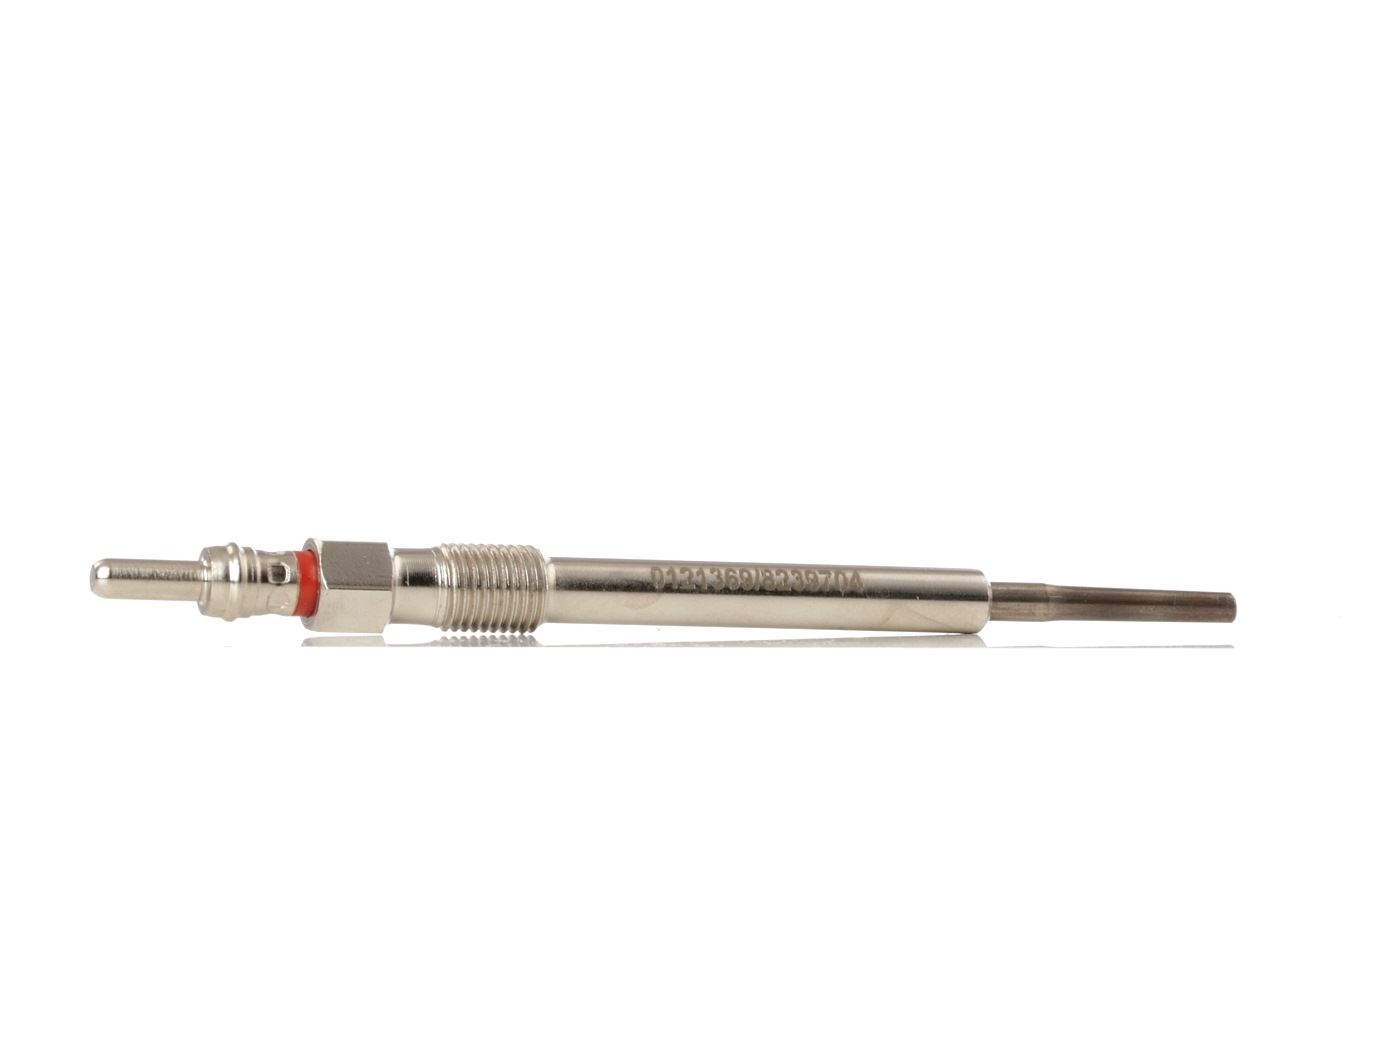 Glow plug STARK 4,4V M9 x 1, after-glow capable, Pencil-type Glow Plug, 119,5 mm, 93° - SKGP-1890159